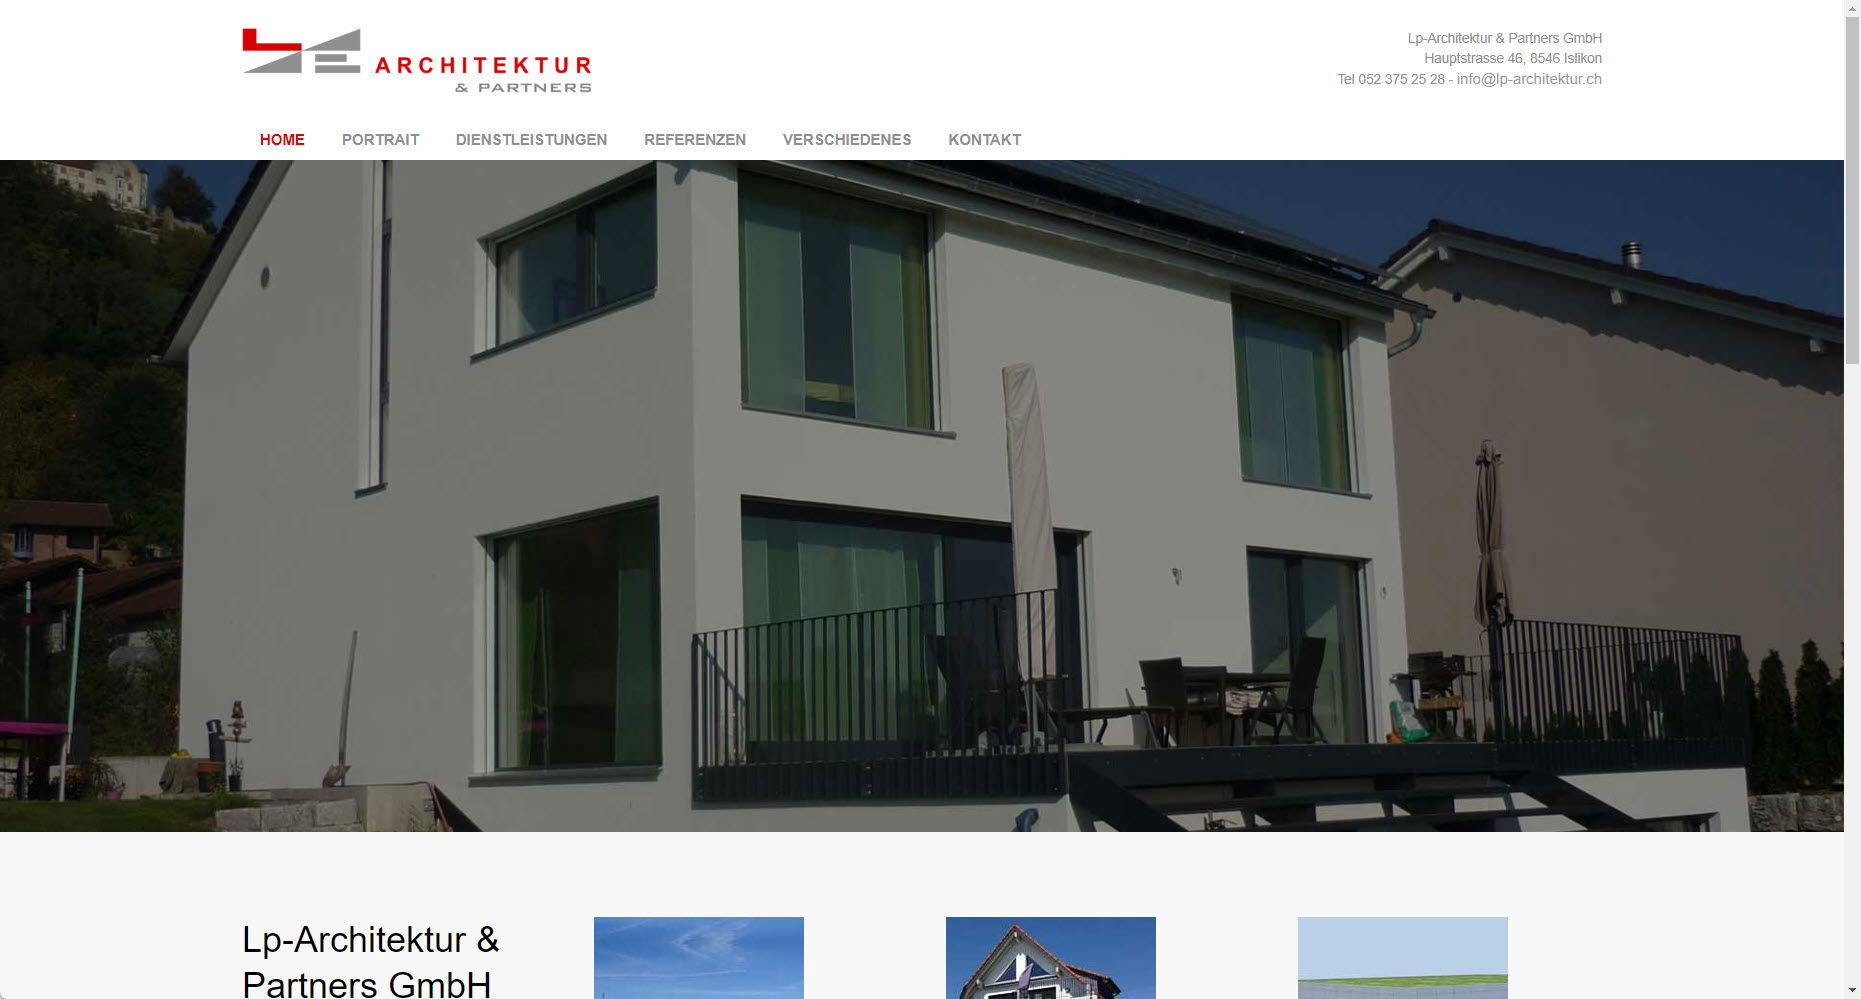 Lp-Architektur & Partners GmbH